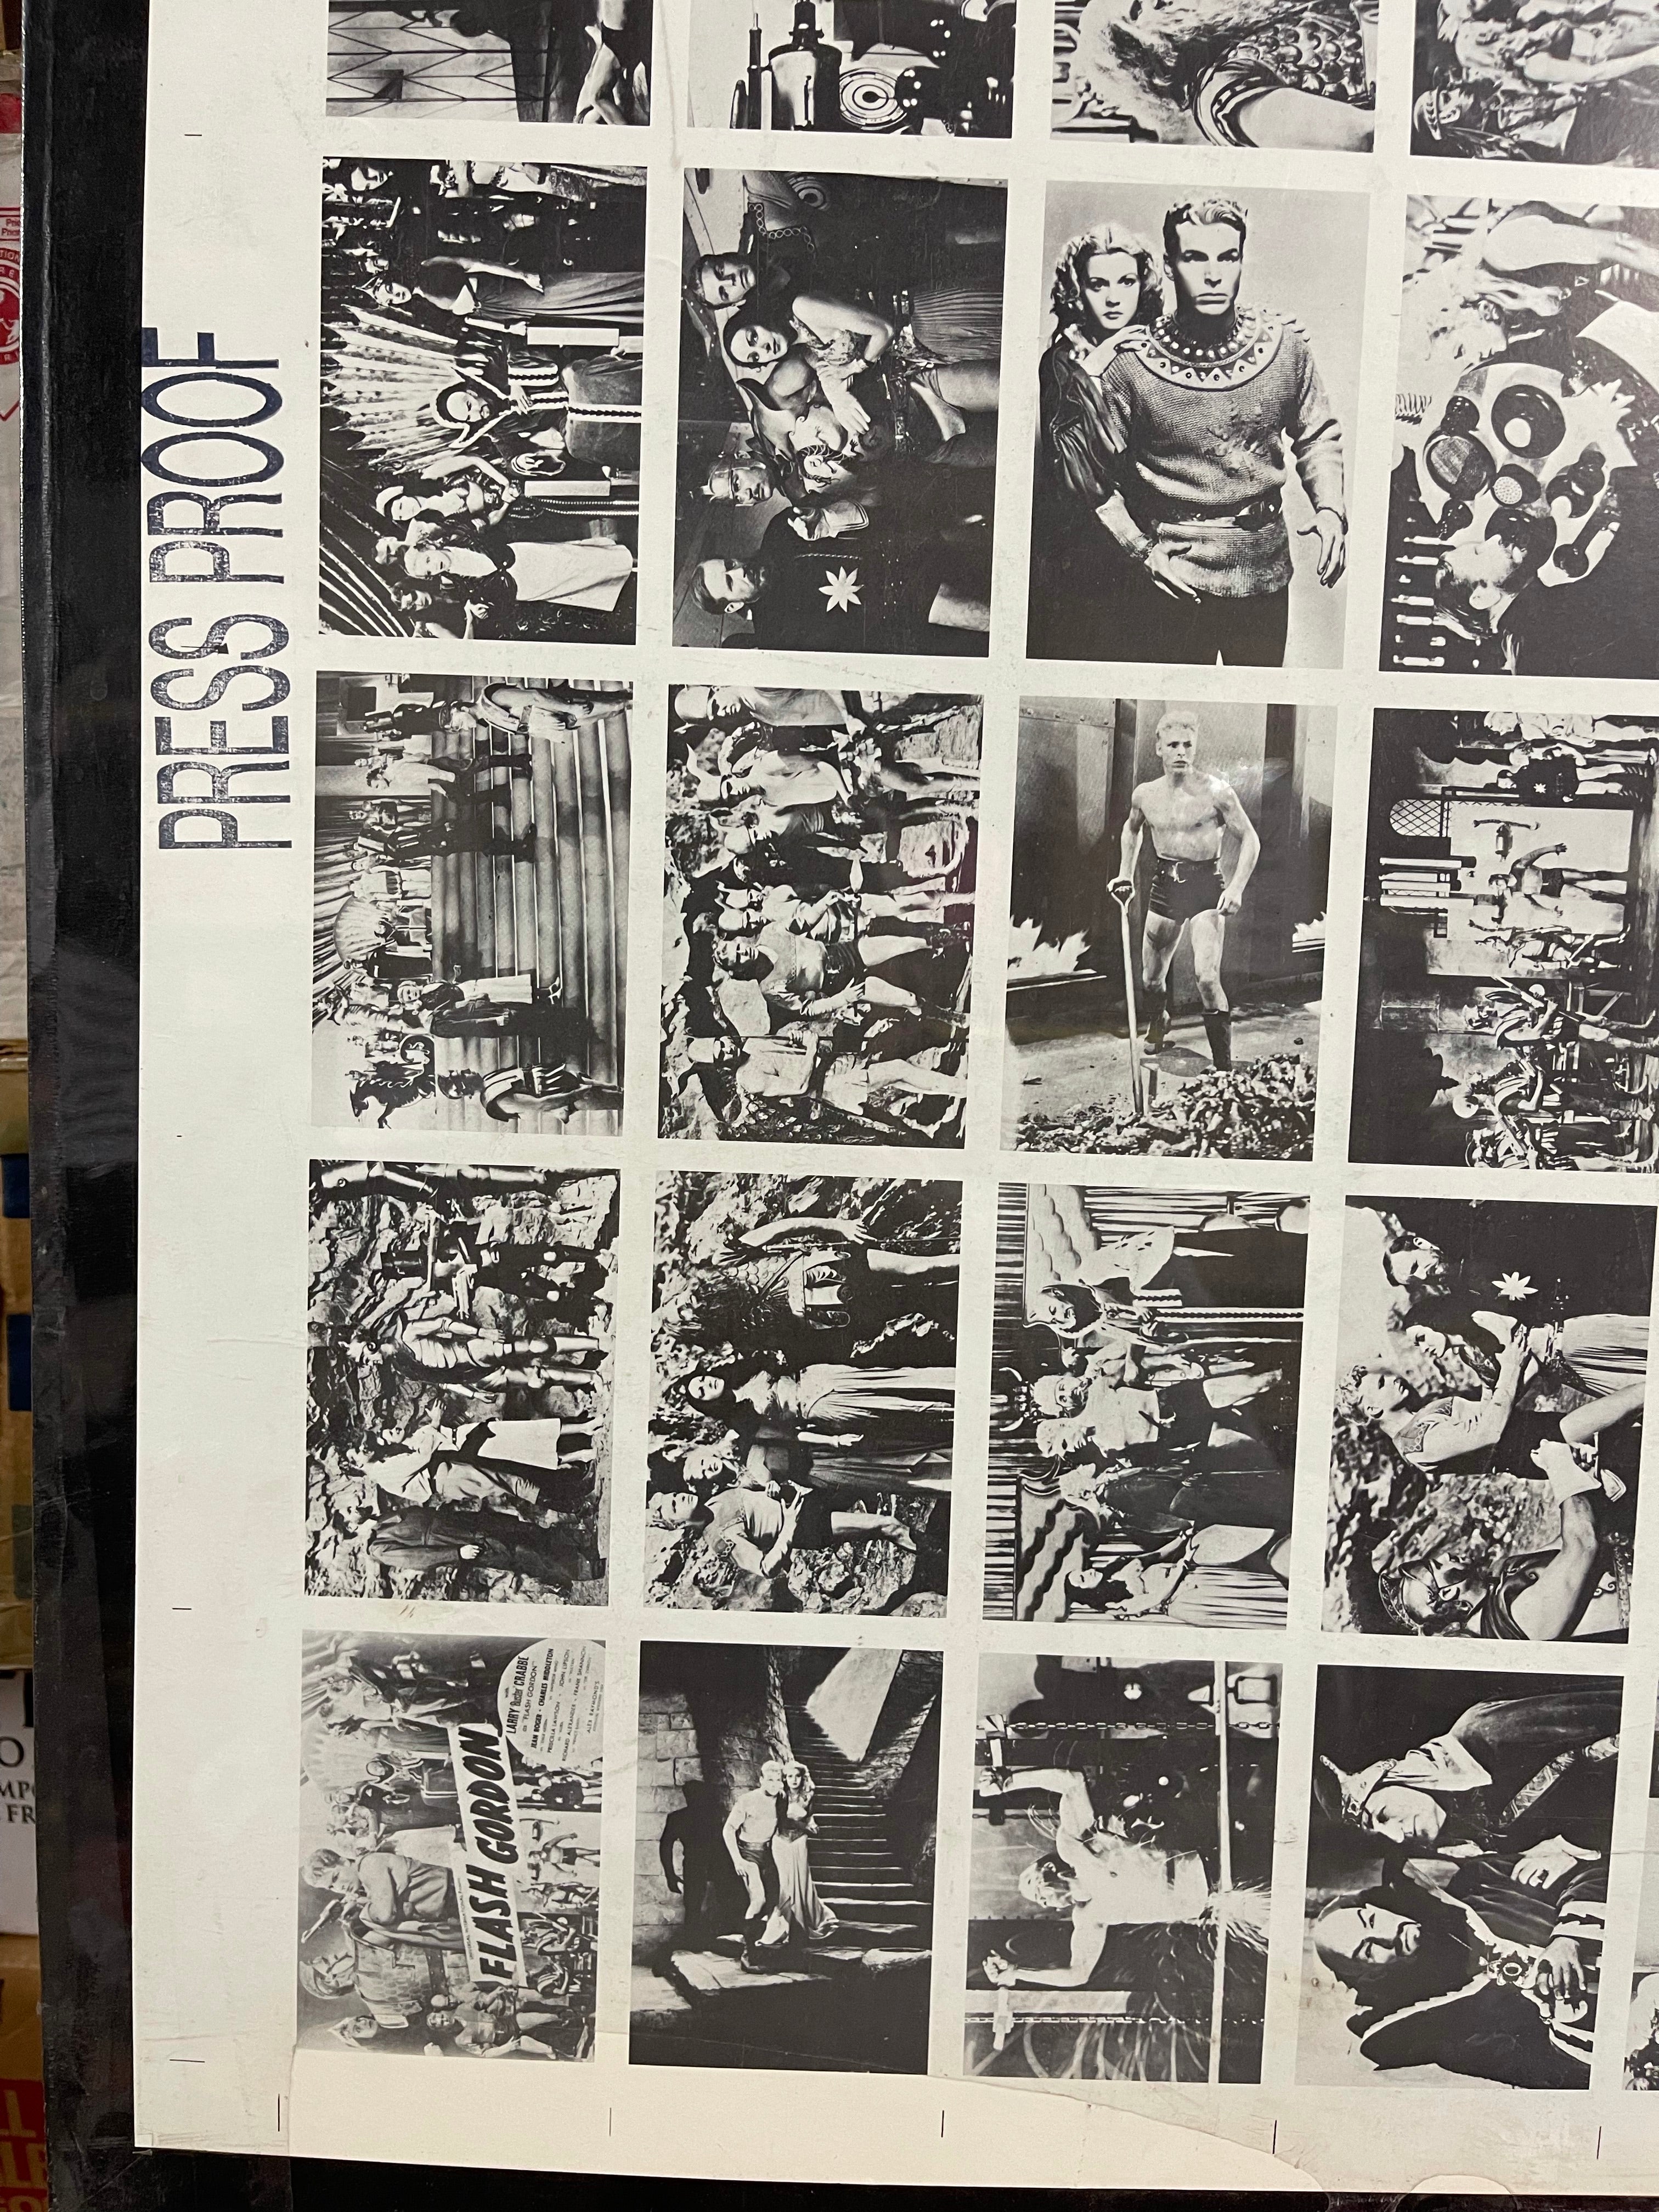 Flash Gordon rare press proof uncut cards sheet 1990s